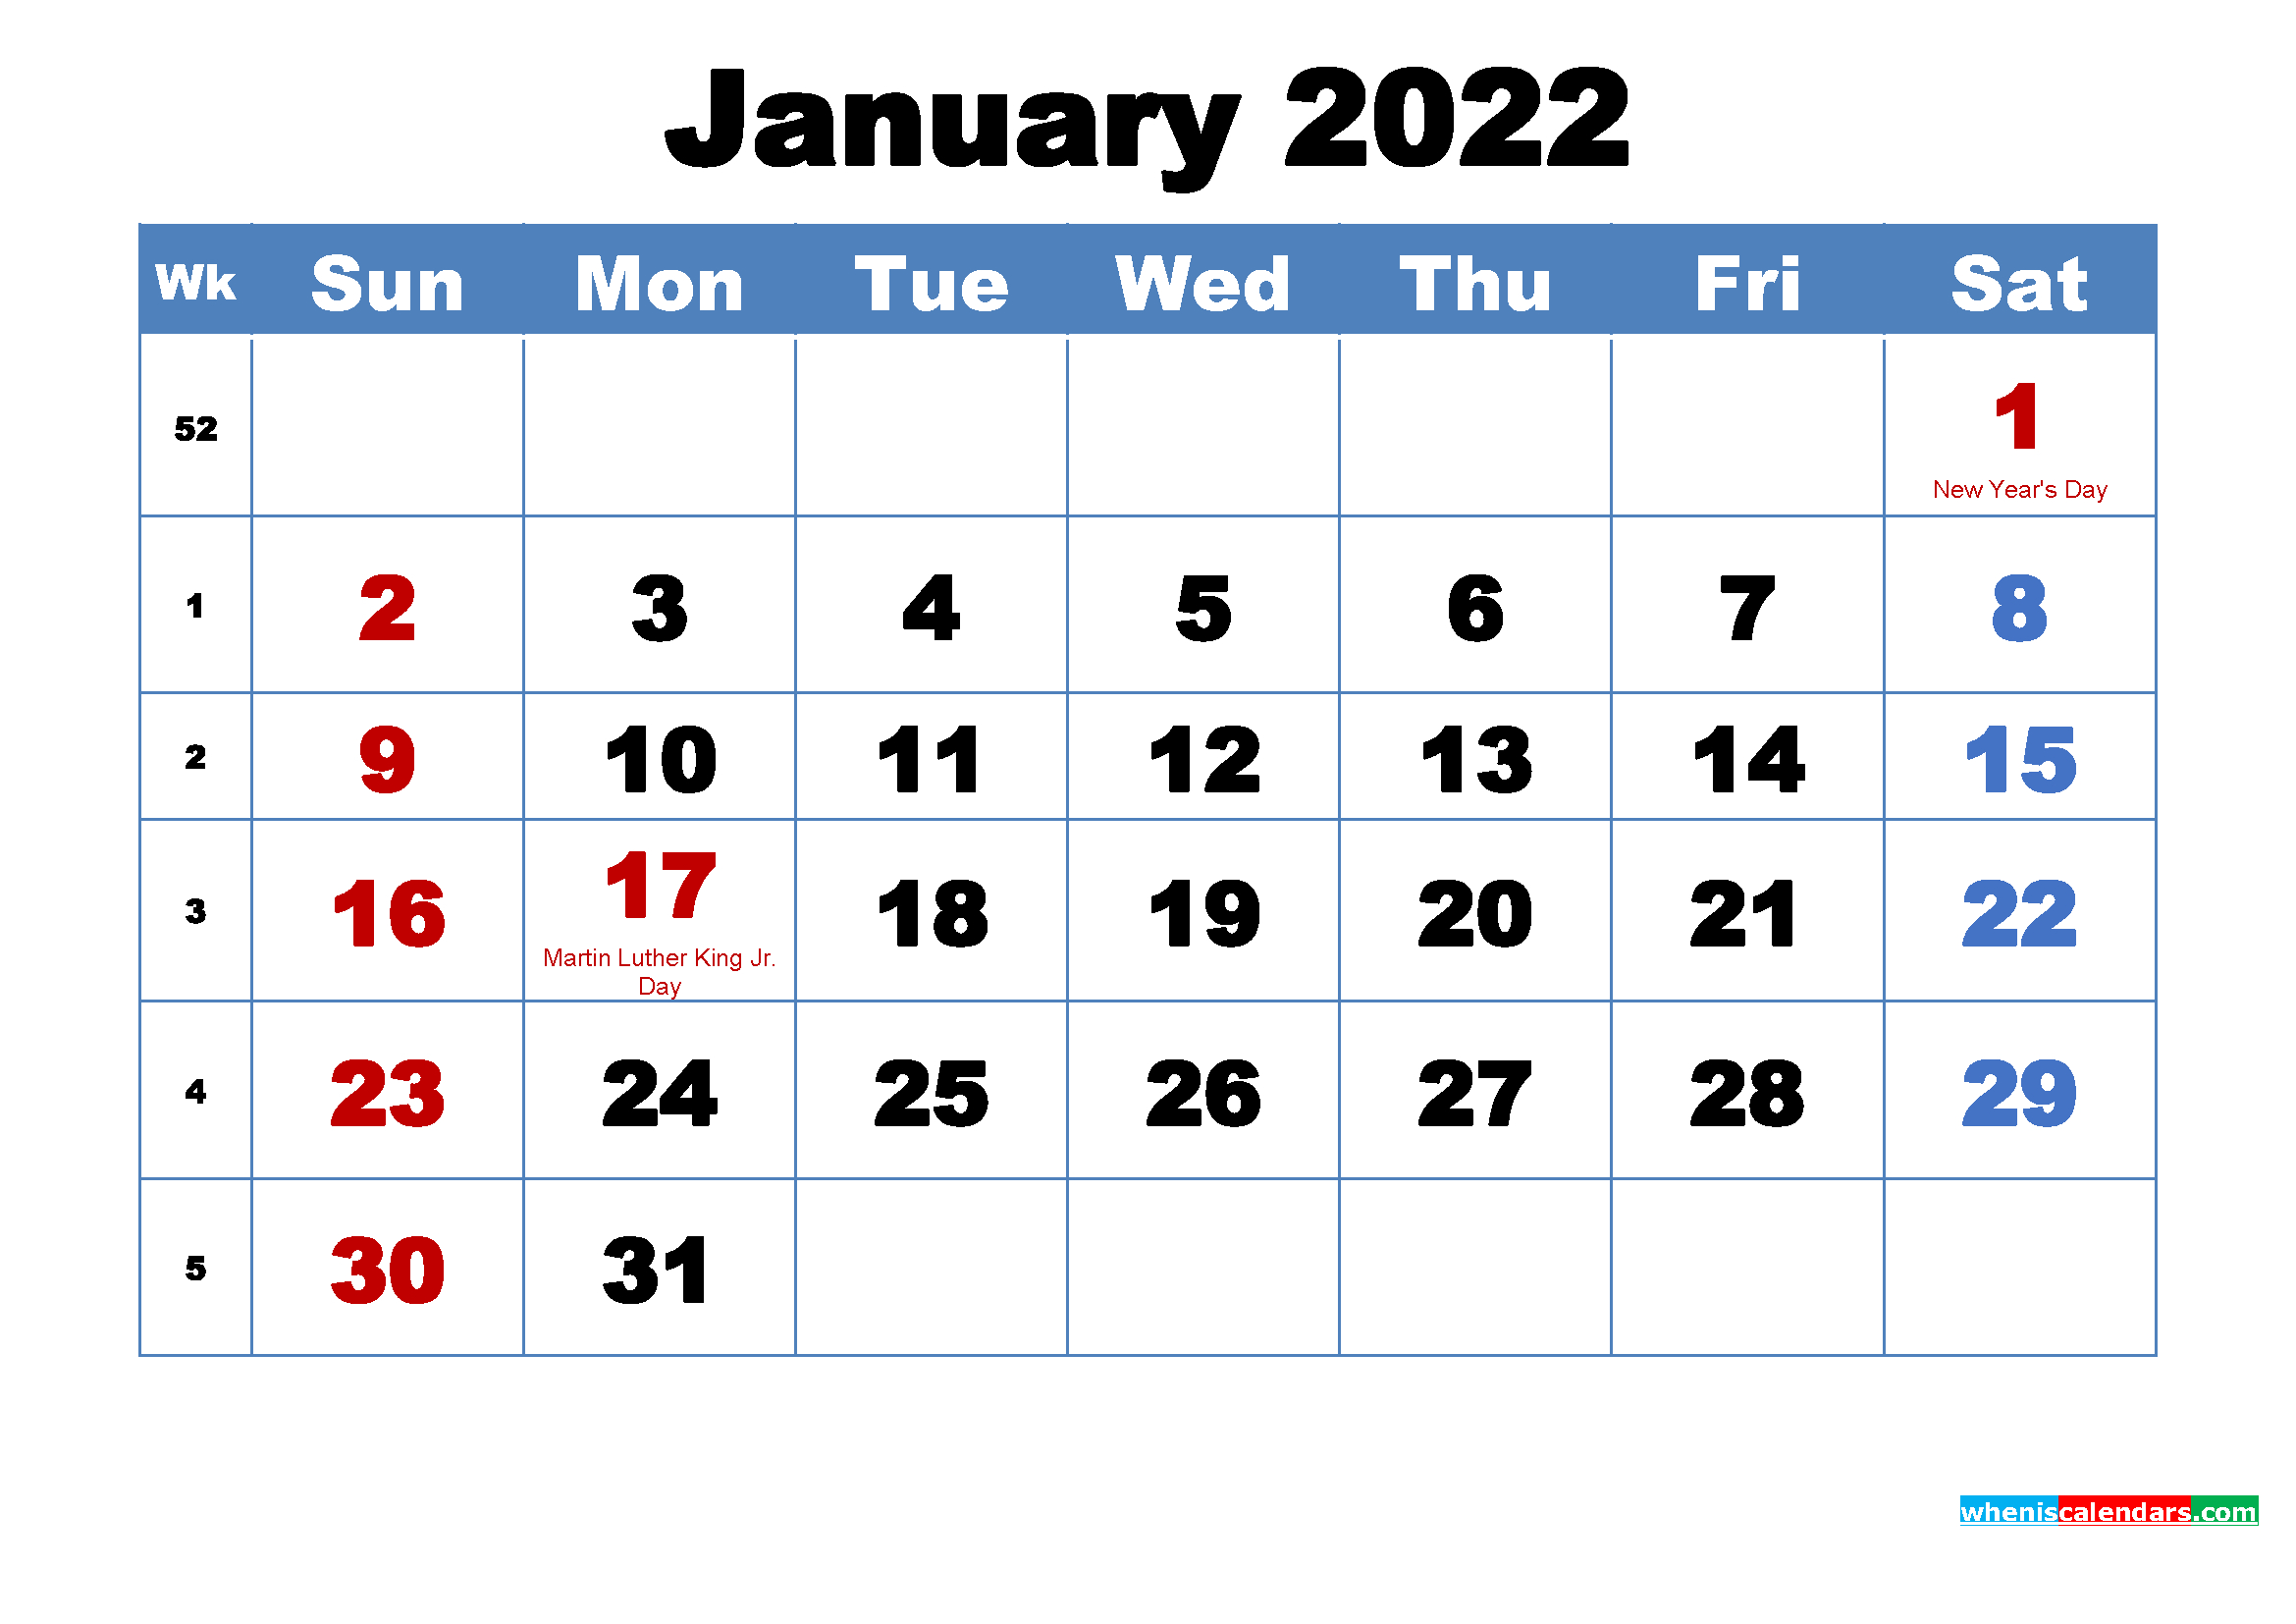 January 2022 Calendar Kalnirnay - Allcalendar